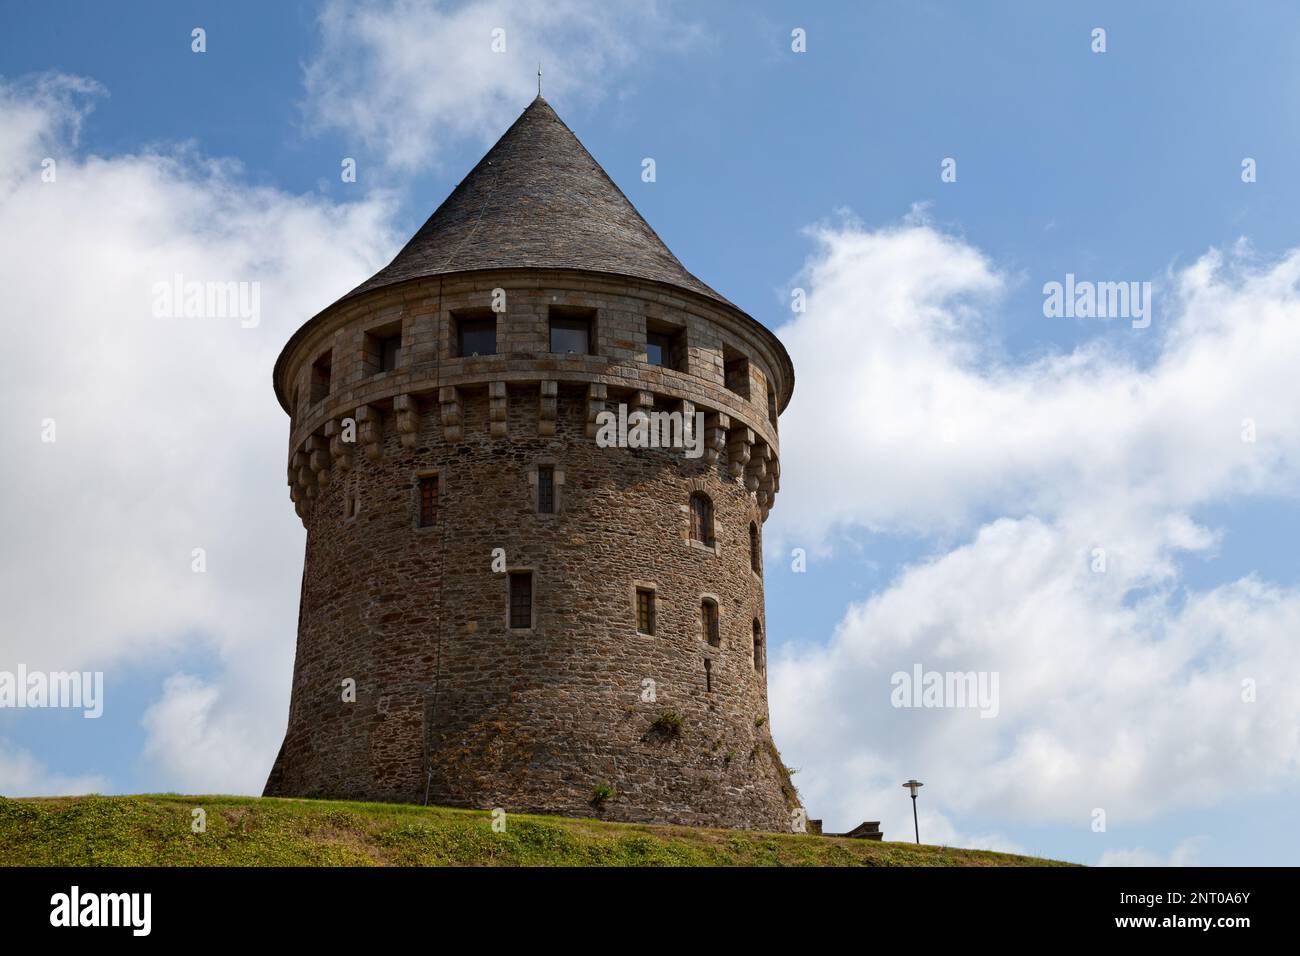 The Tour Tanguy, Bastille de Quilbignon or Tour de la Motte Tanguy is a medieval tower on a rocky motte beside the Penfeld river in Brest, France. Pro Stock Photo